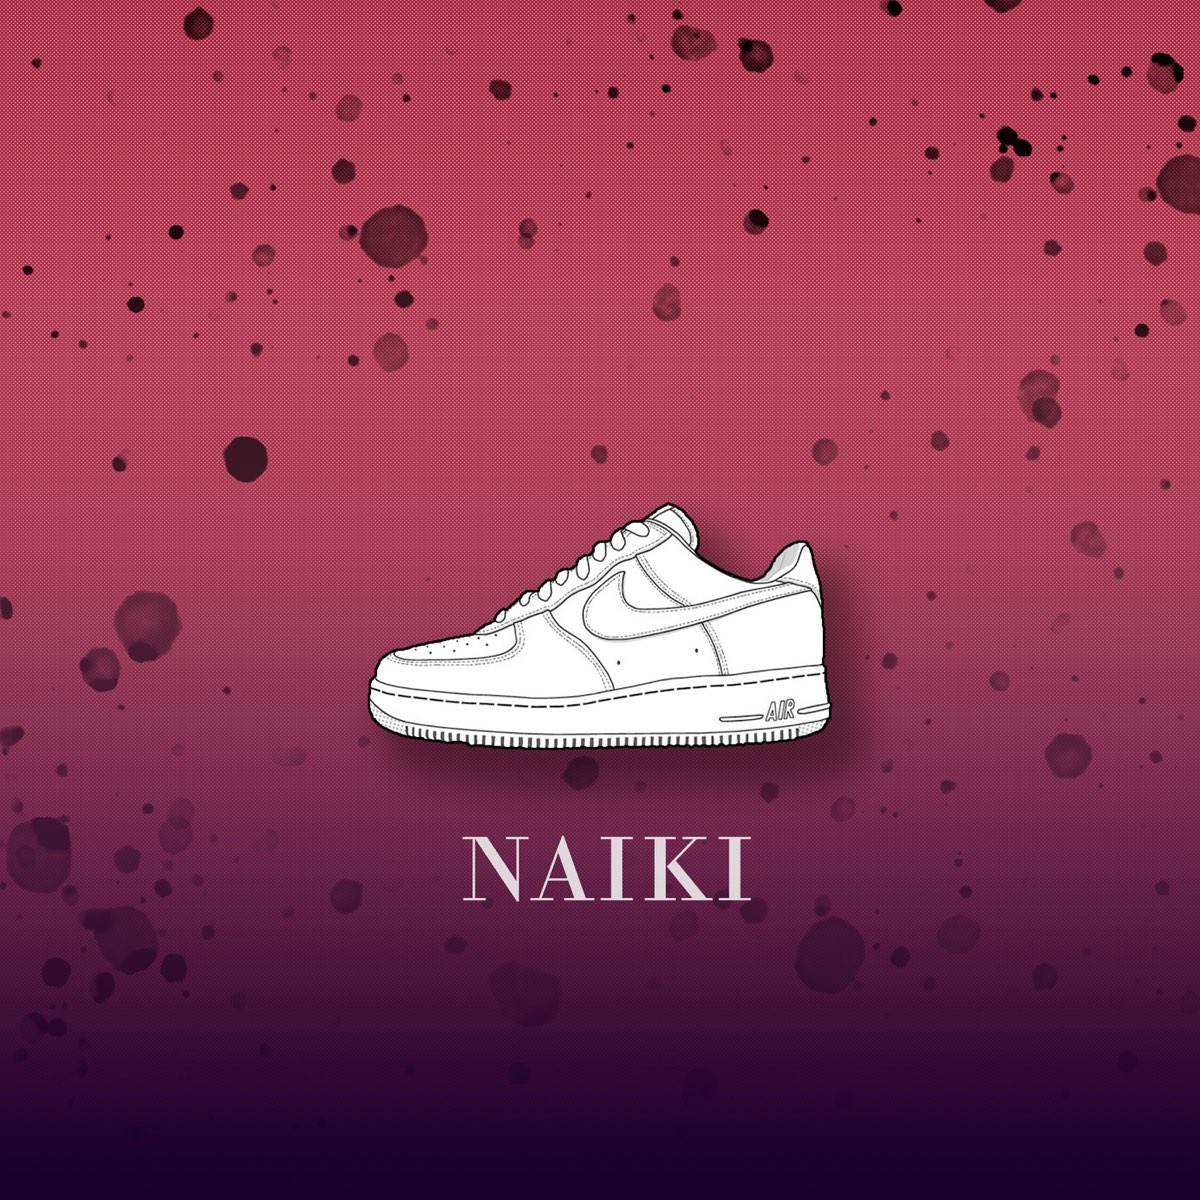 Naiki - Single de Nax King en Apple Music